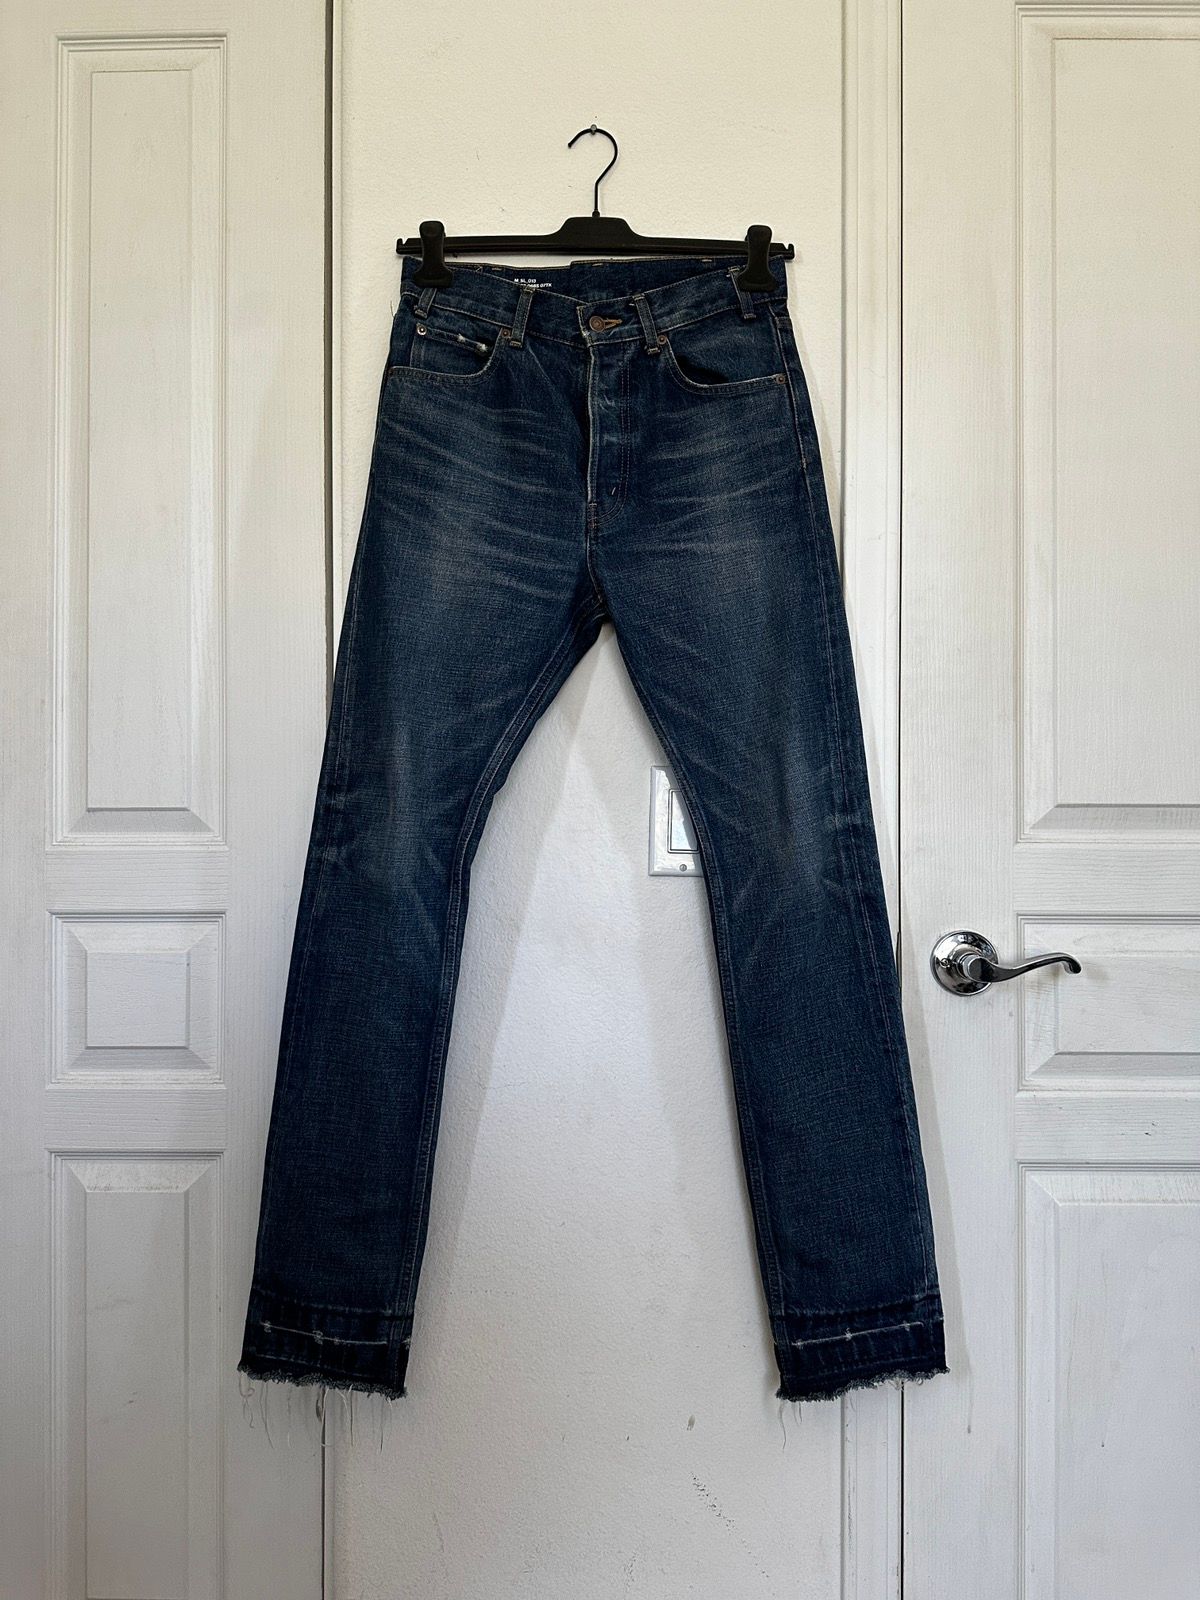 Celine Lou Jeans in Vintage Dark Union Wash | Grailed